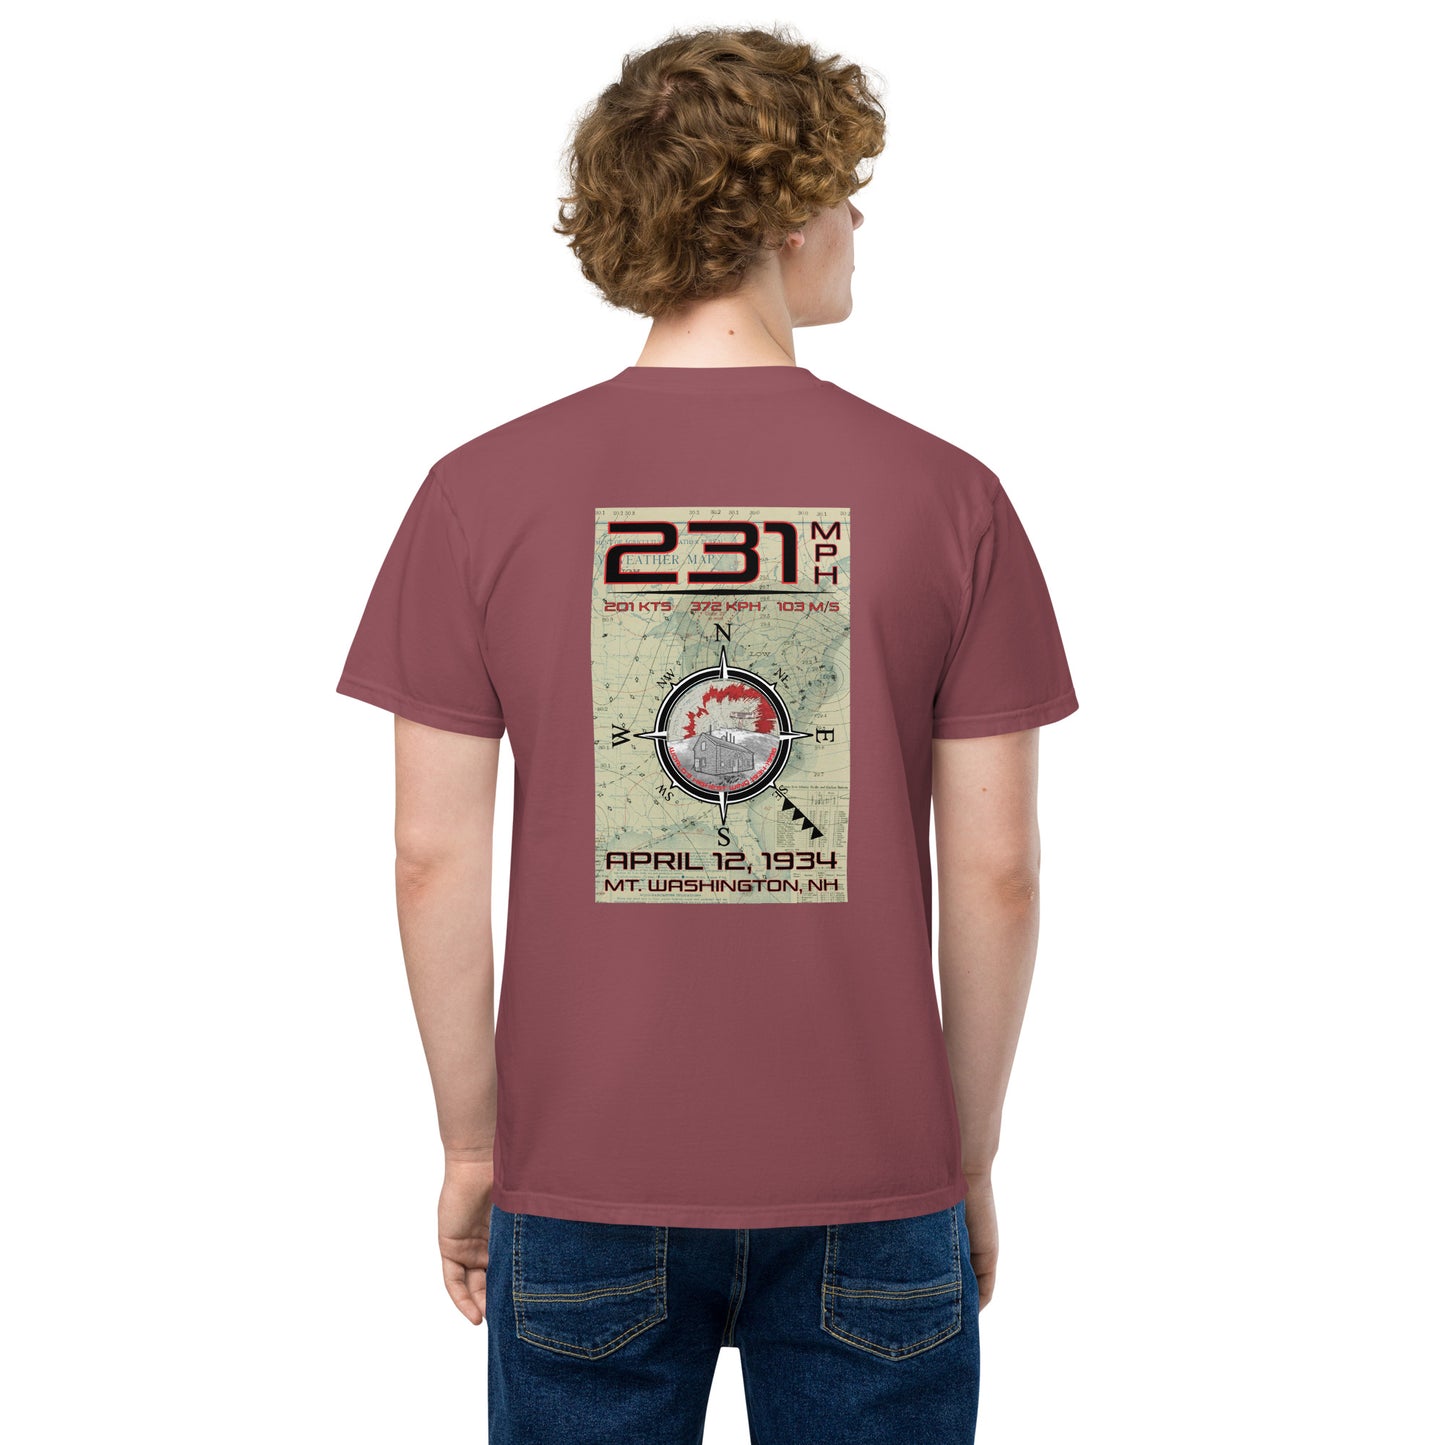 Mt Washington, NH - 231 mph Unisex pocket t-shirt